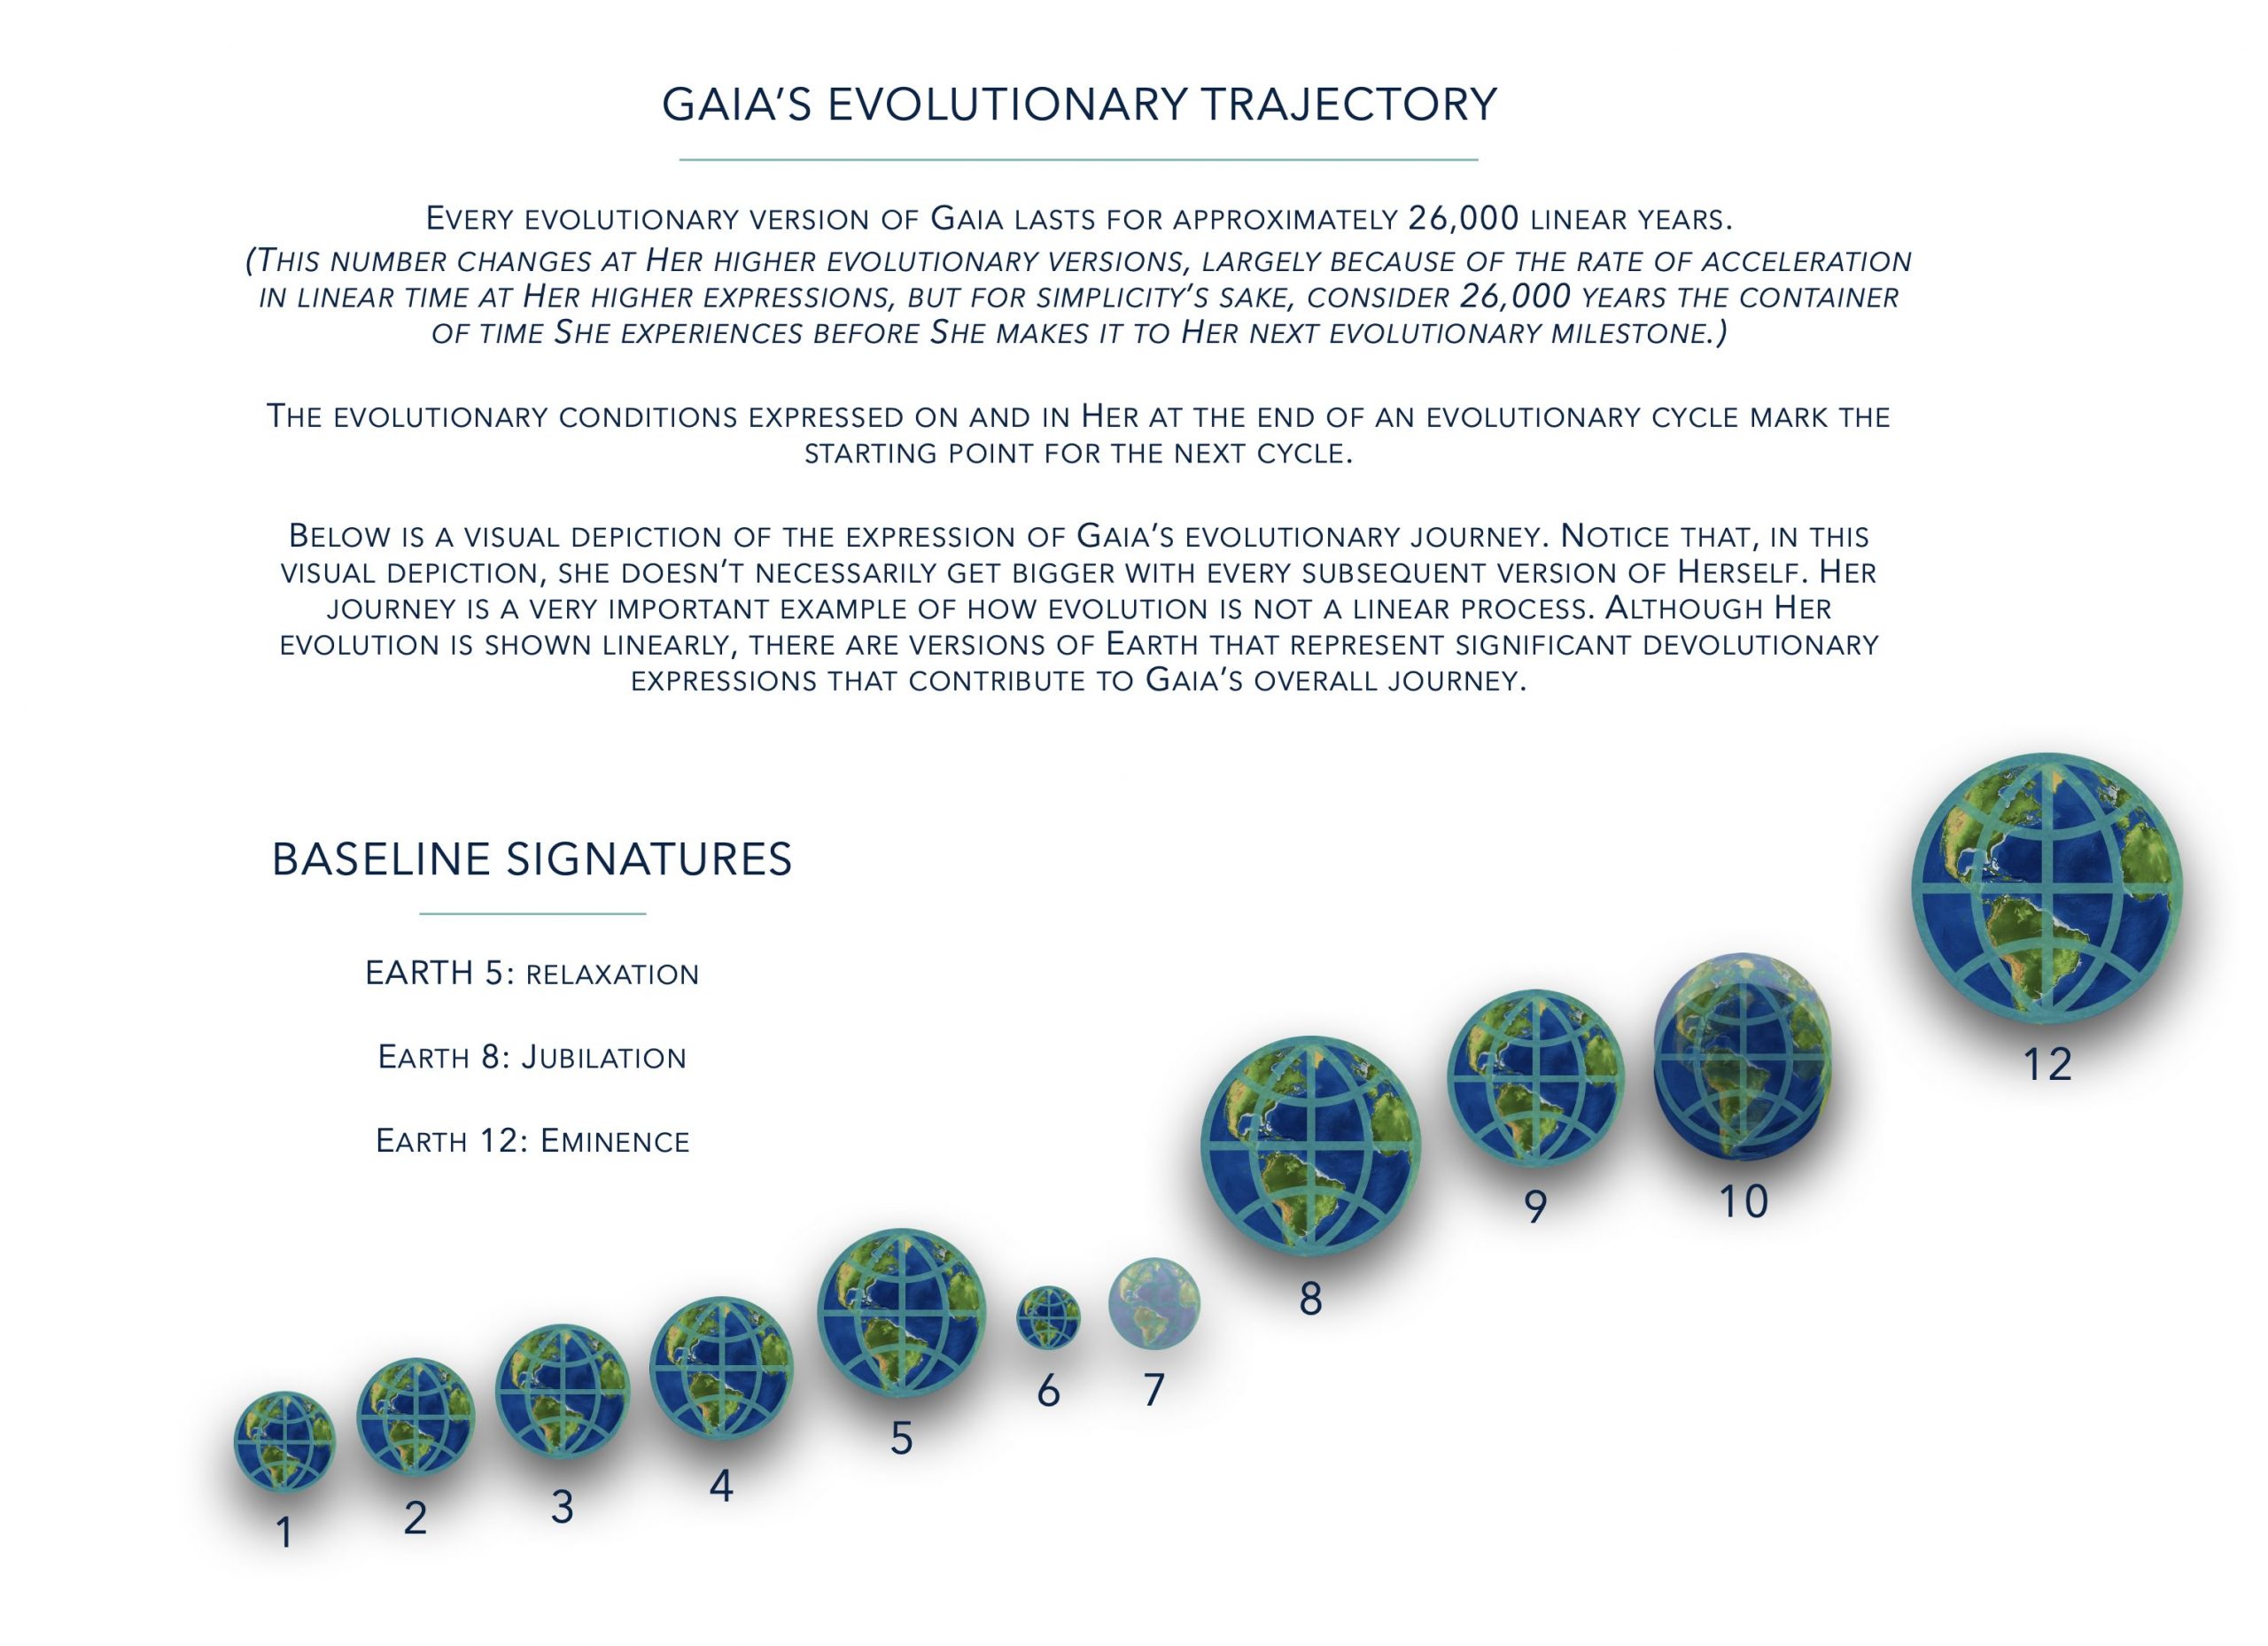 Gaia's evolutionary trajectory